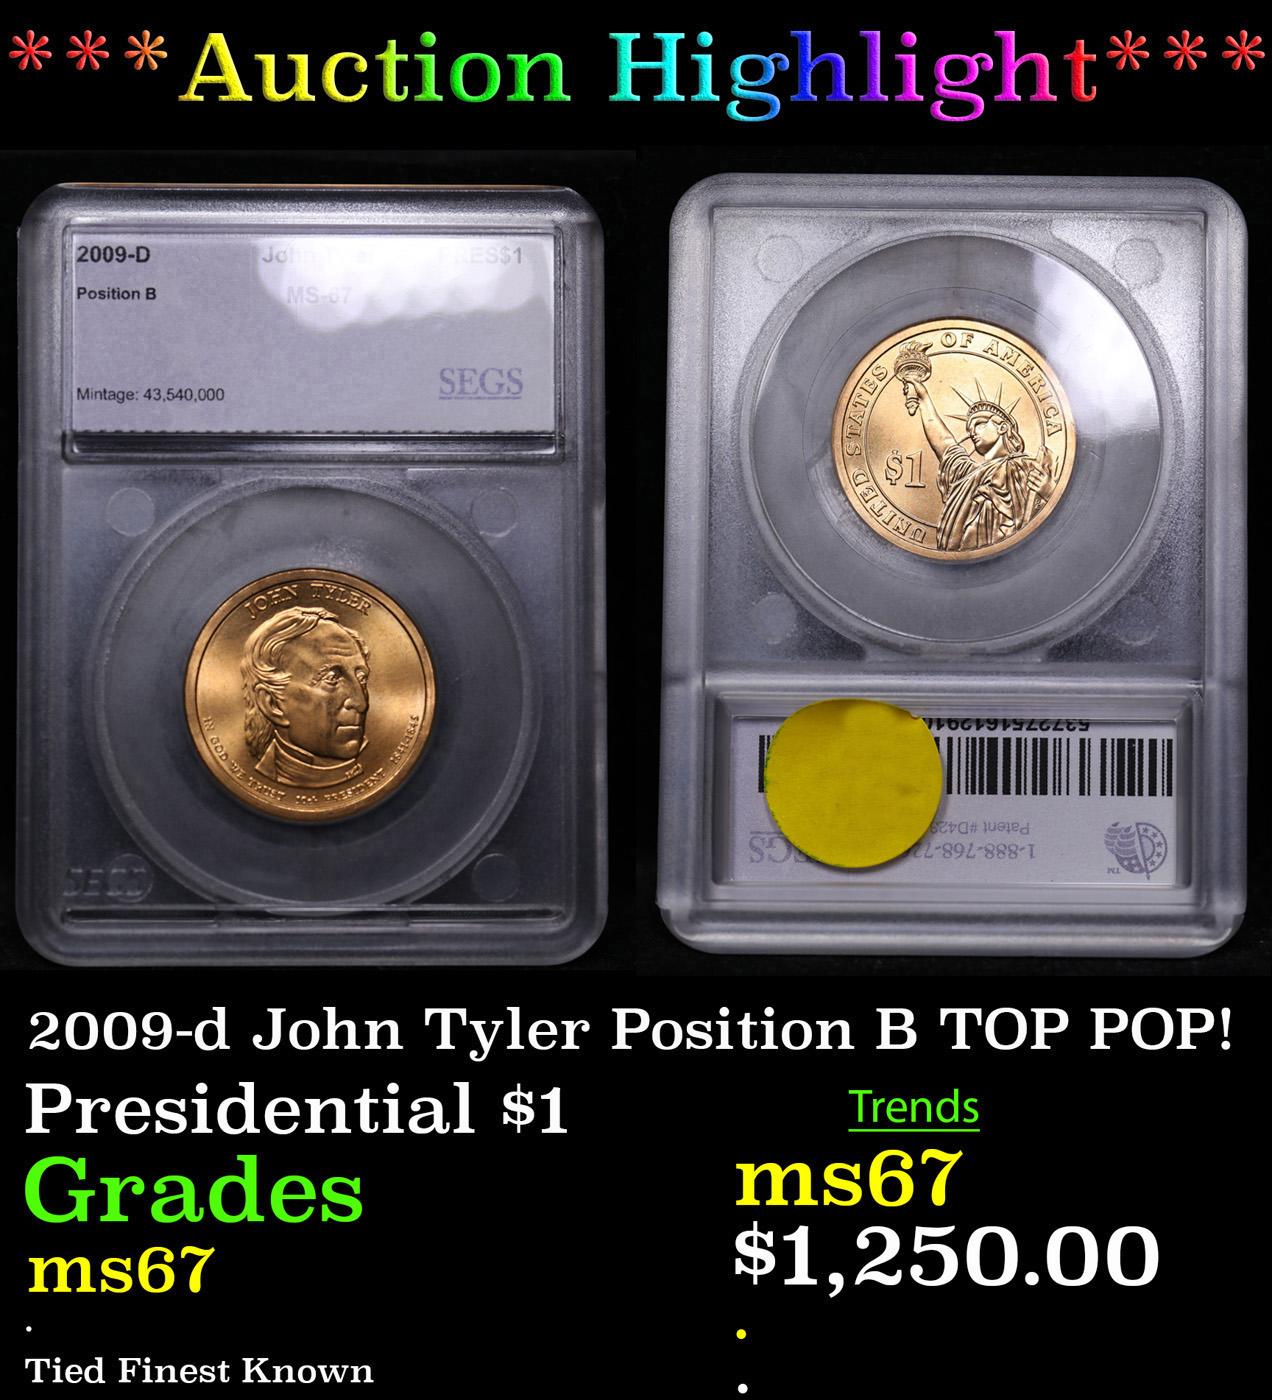 ***Auction Highlight*** 2009-d John Tyler Position B Presidential Dollar TOP POP! 1 Graded ms67 By S